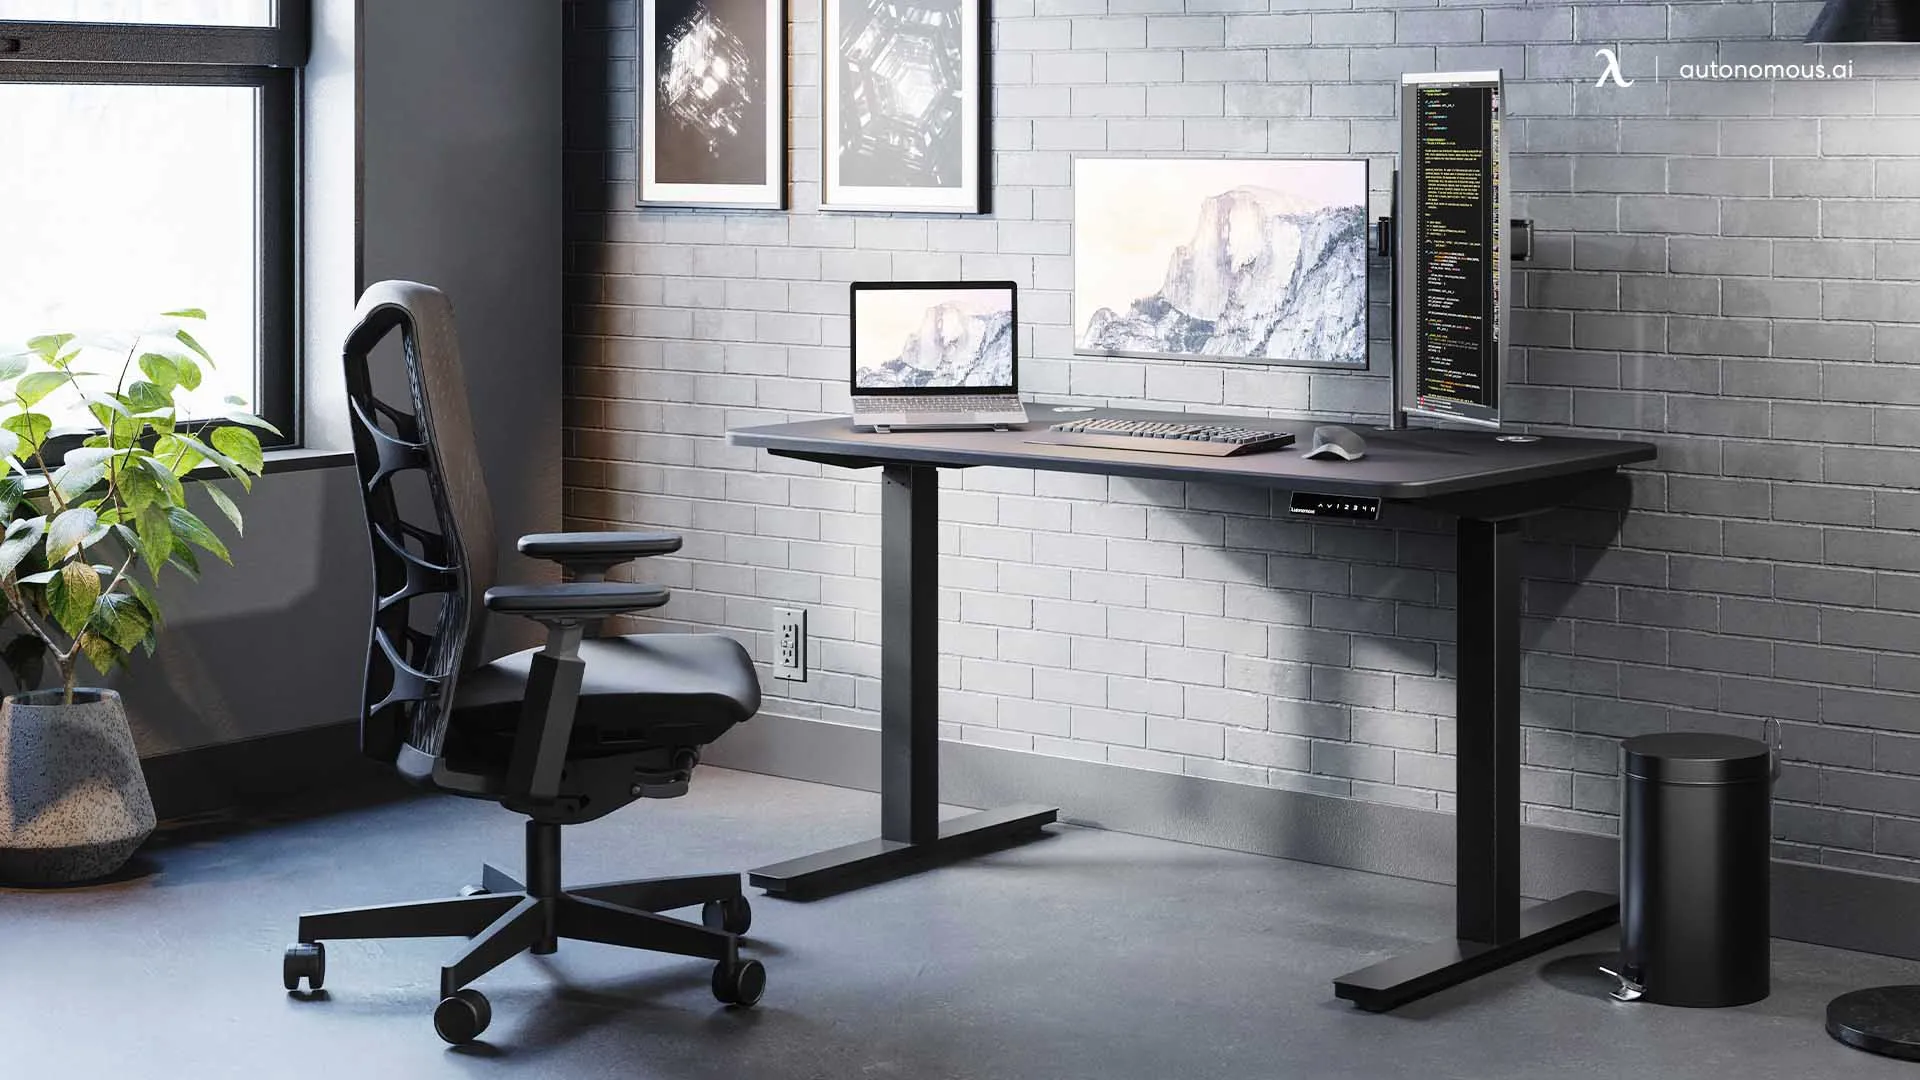 Furniture Transfers modern office desk